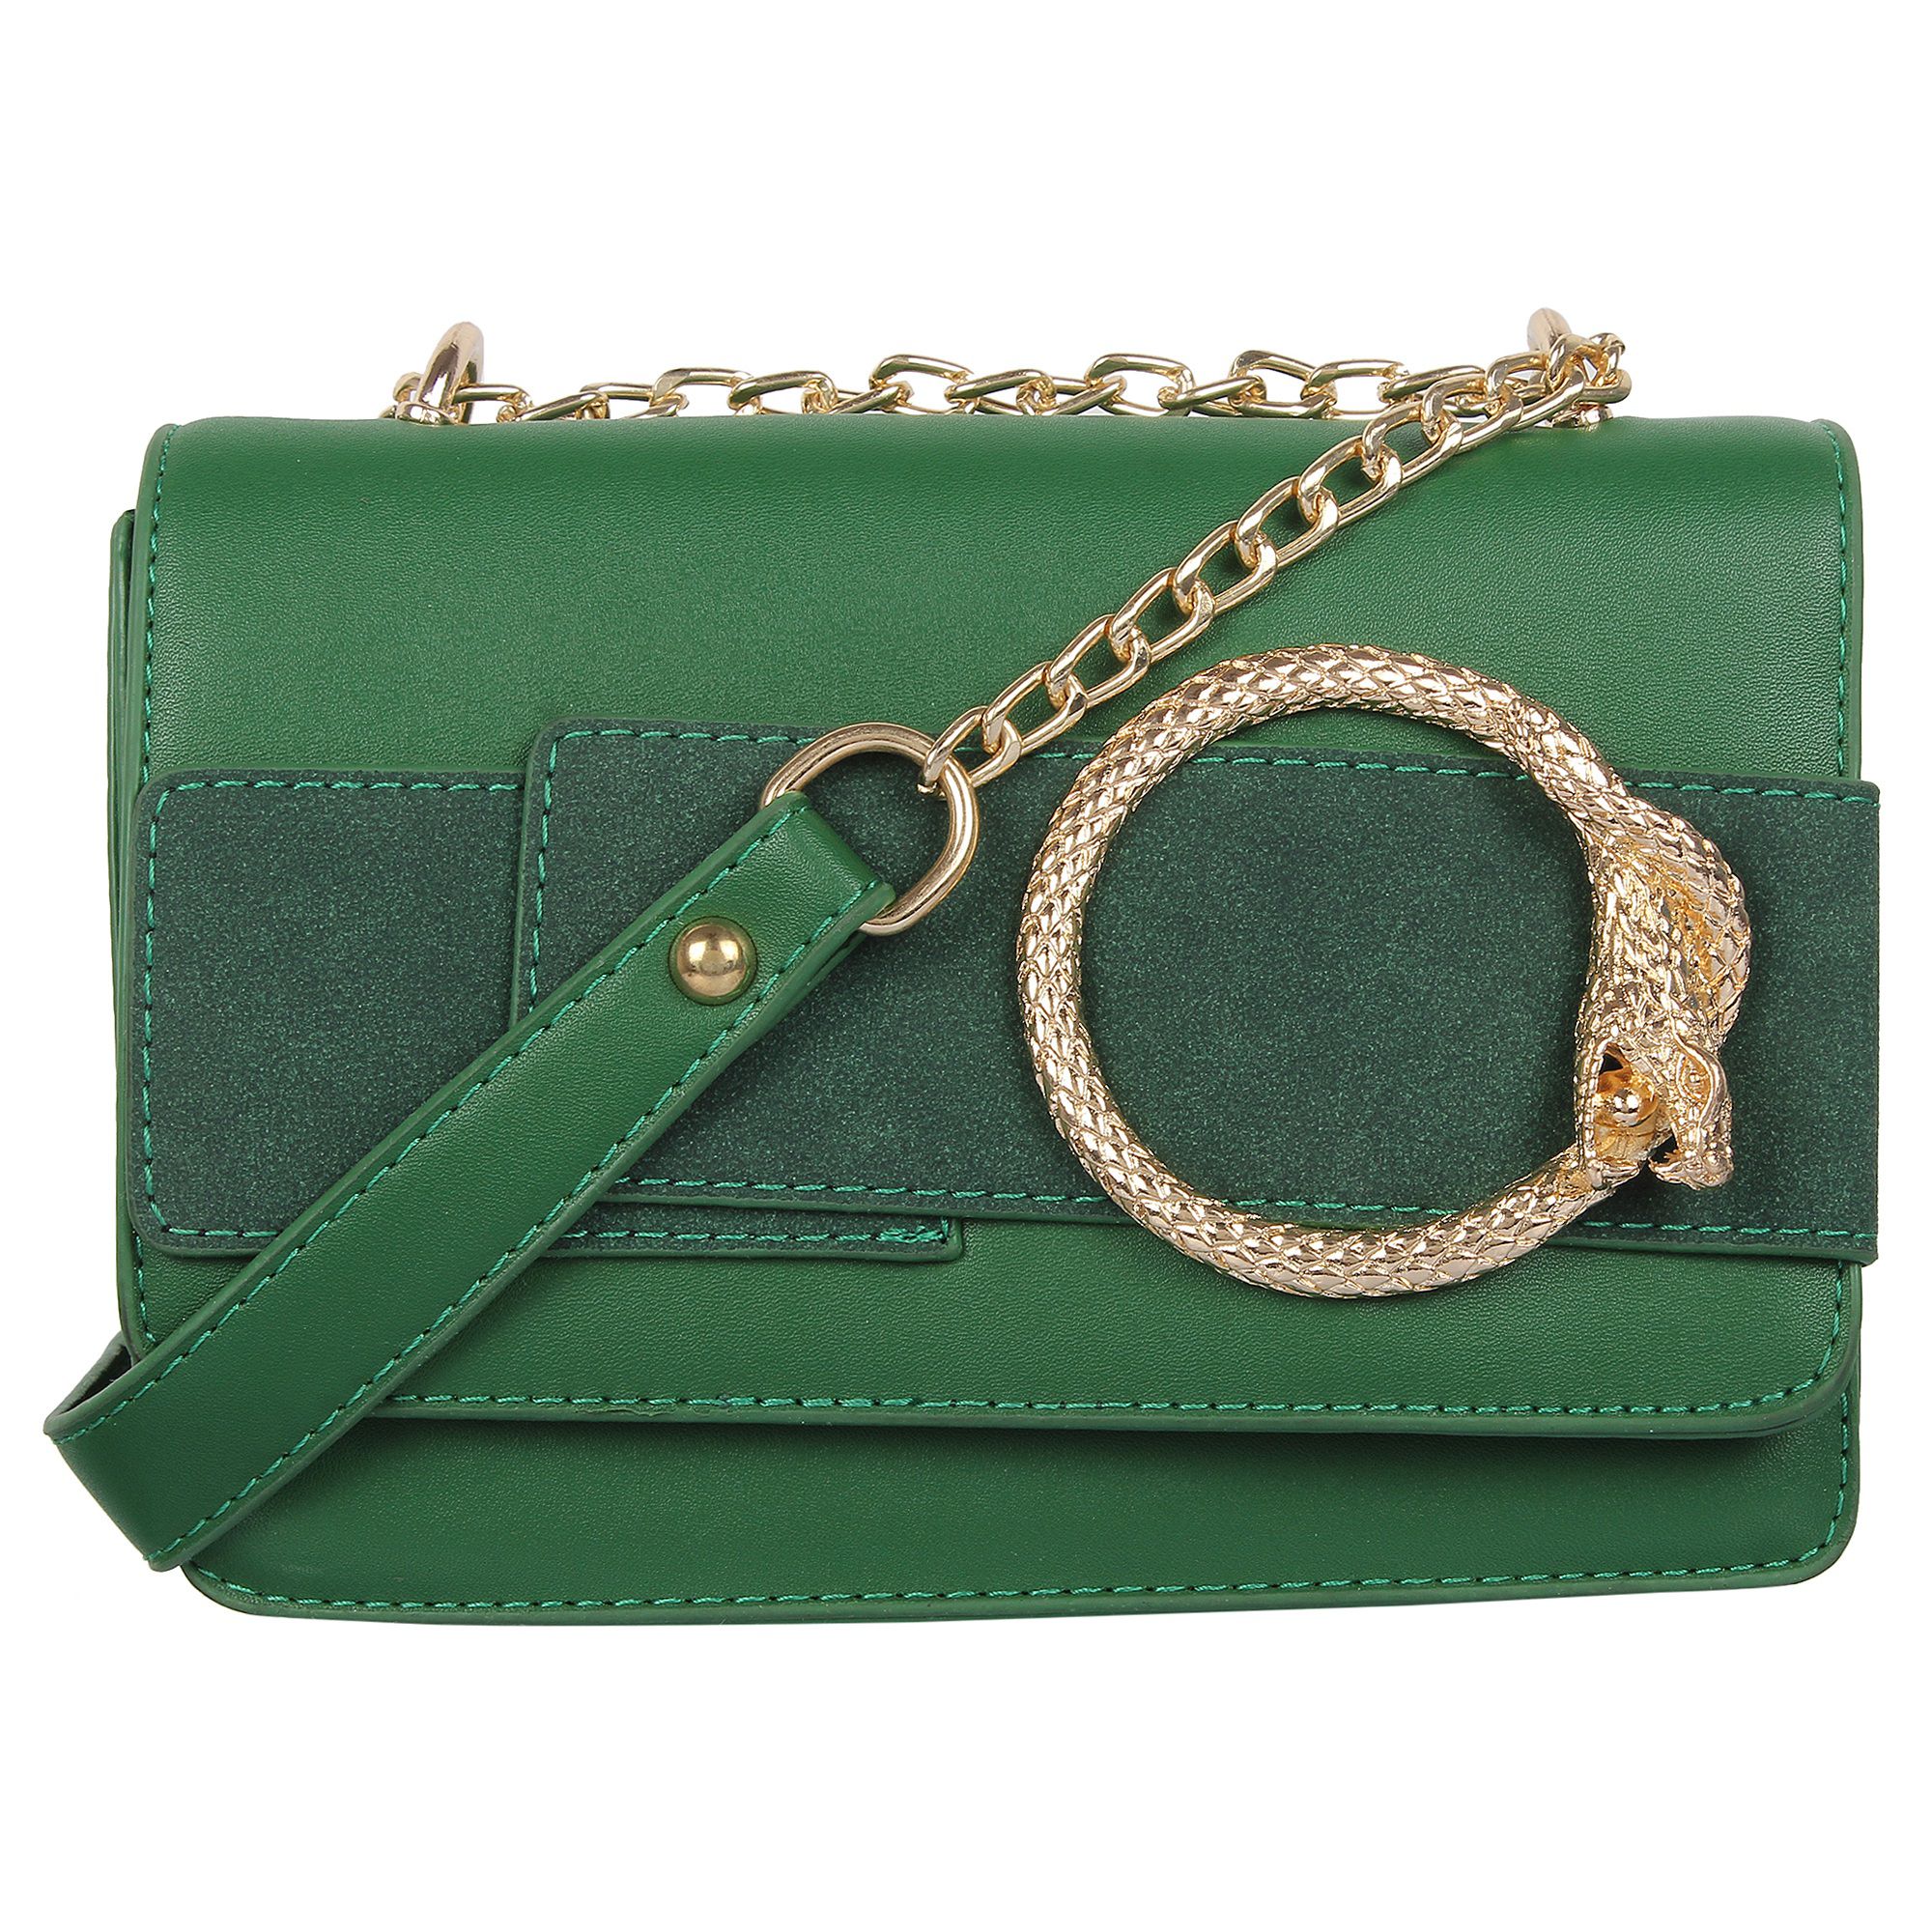 Fashion Fanda Green Faux Leather Handheld - Buy Fashion Fanda Green ...